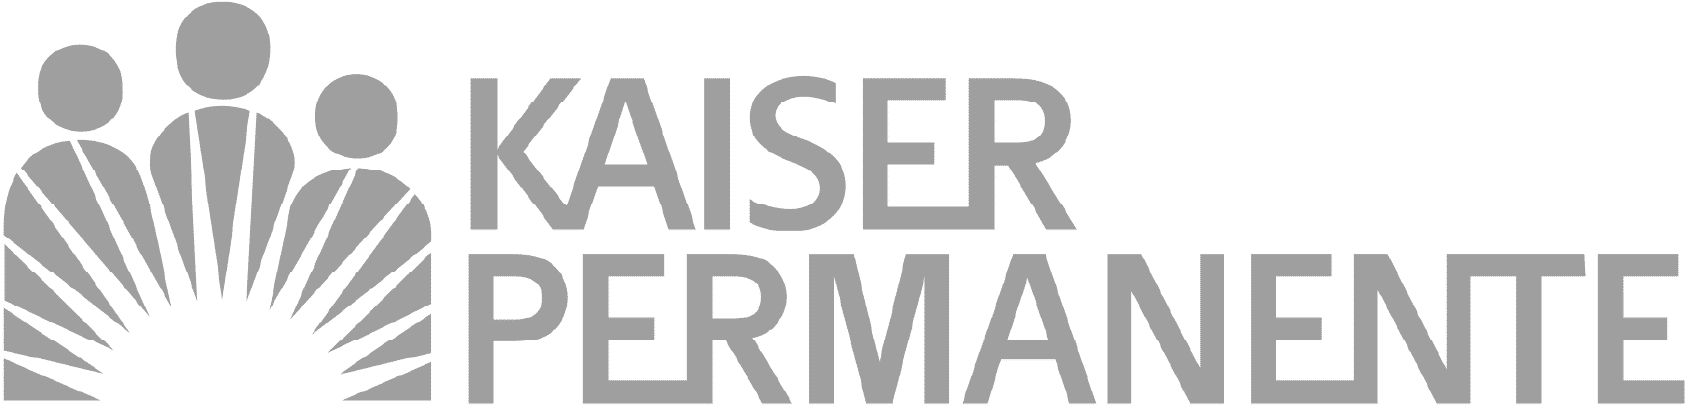 Kaiser Permanente Enov8 Test Environment Management